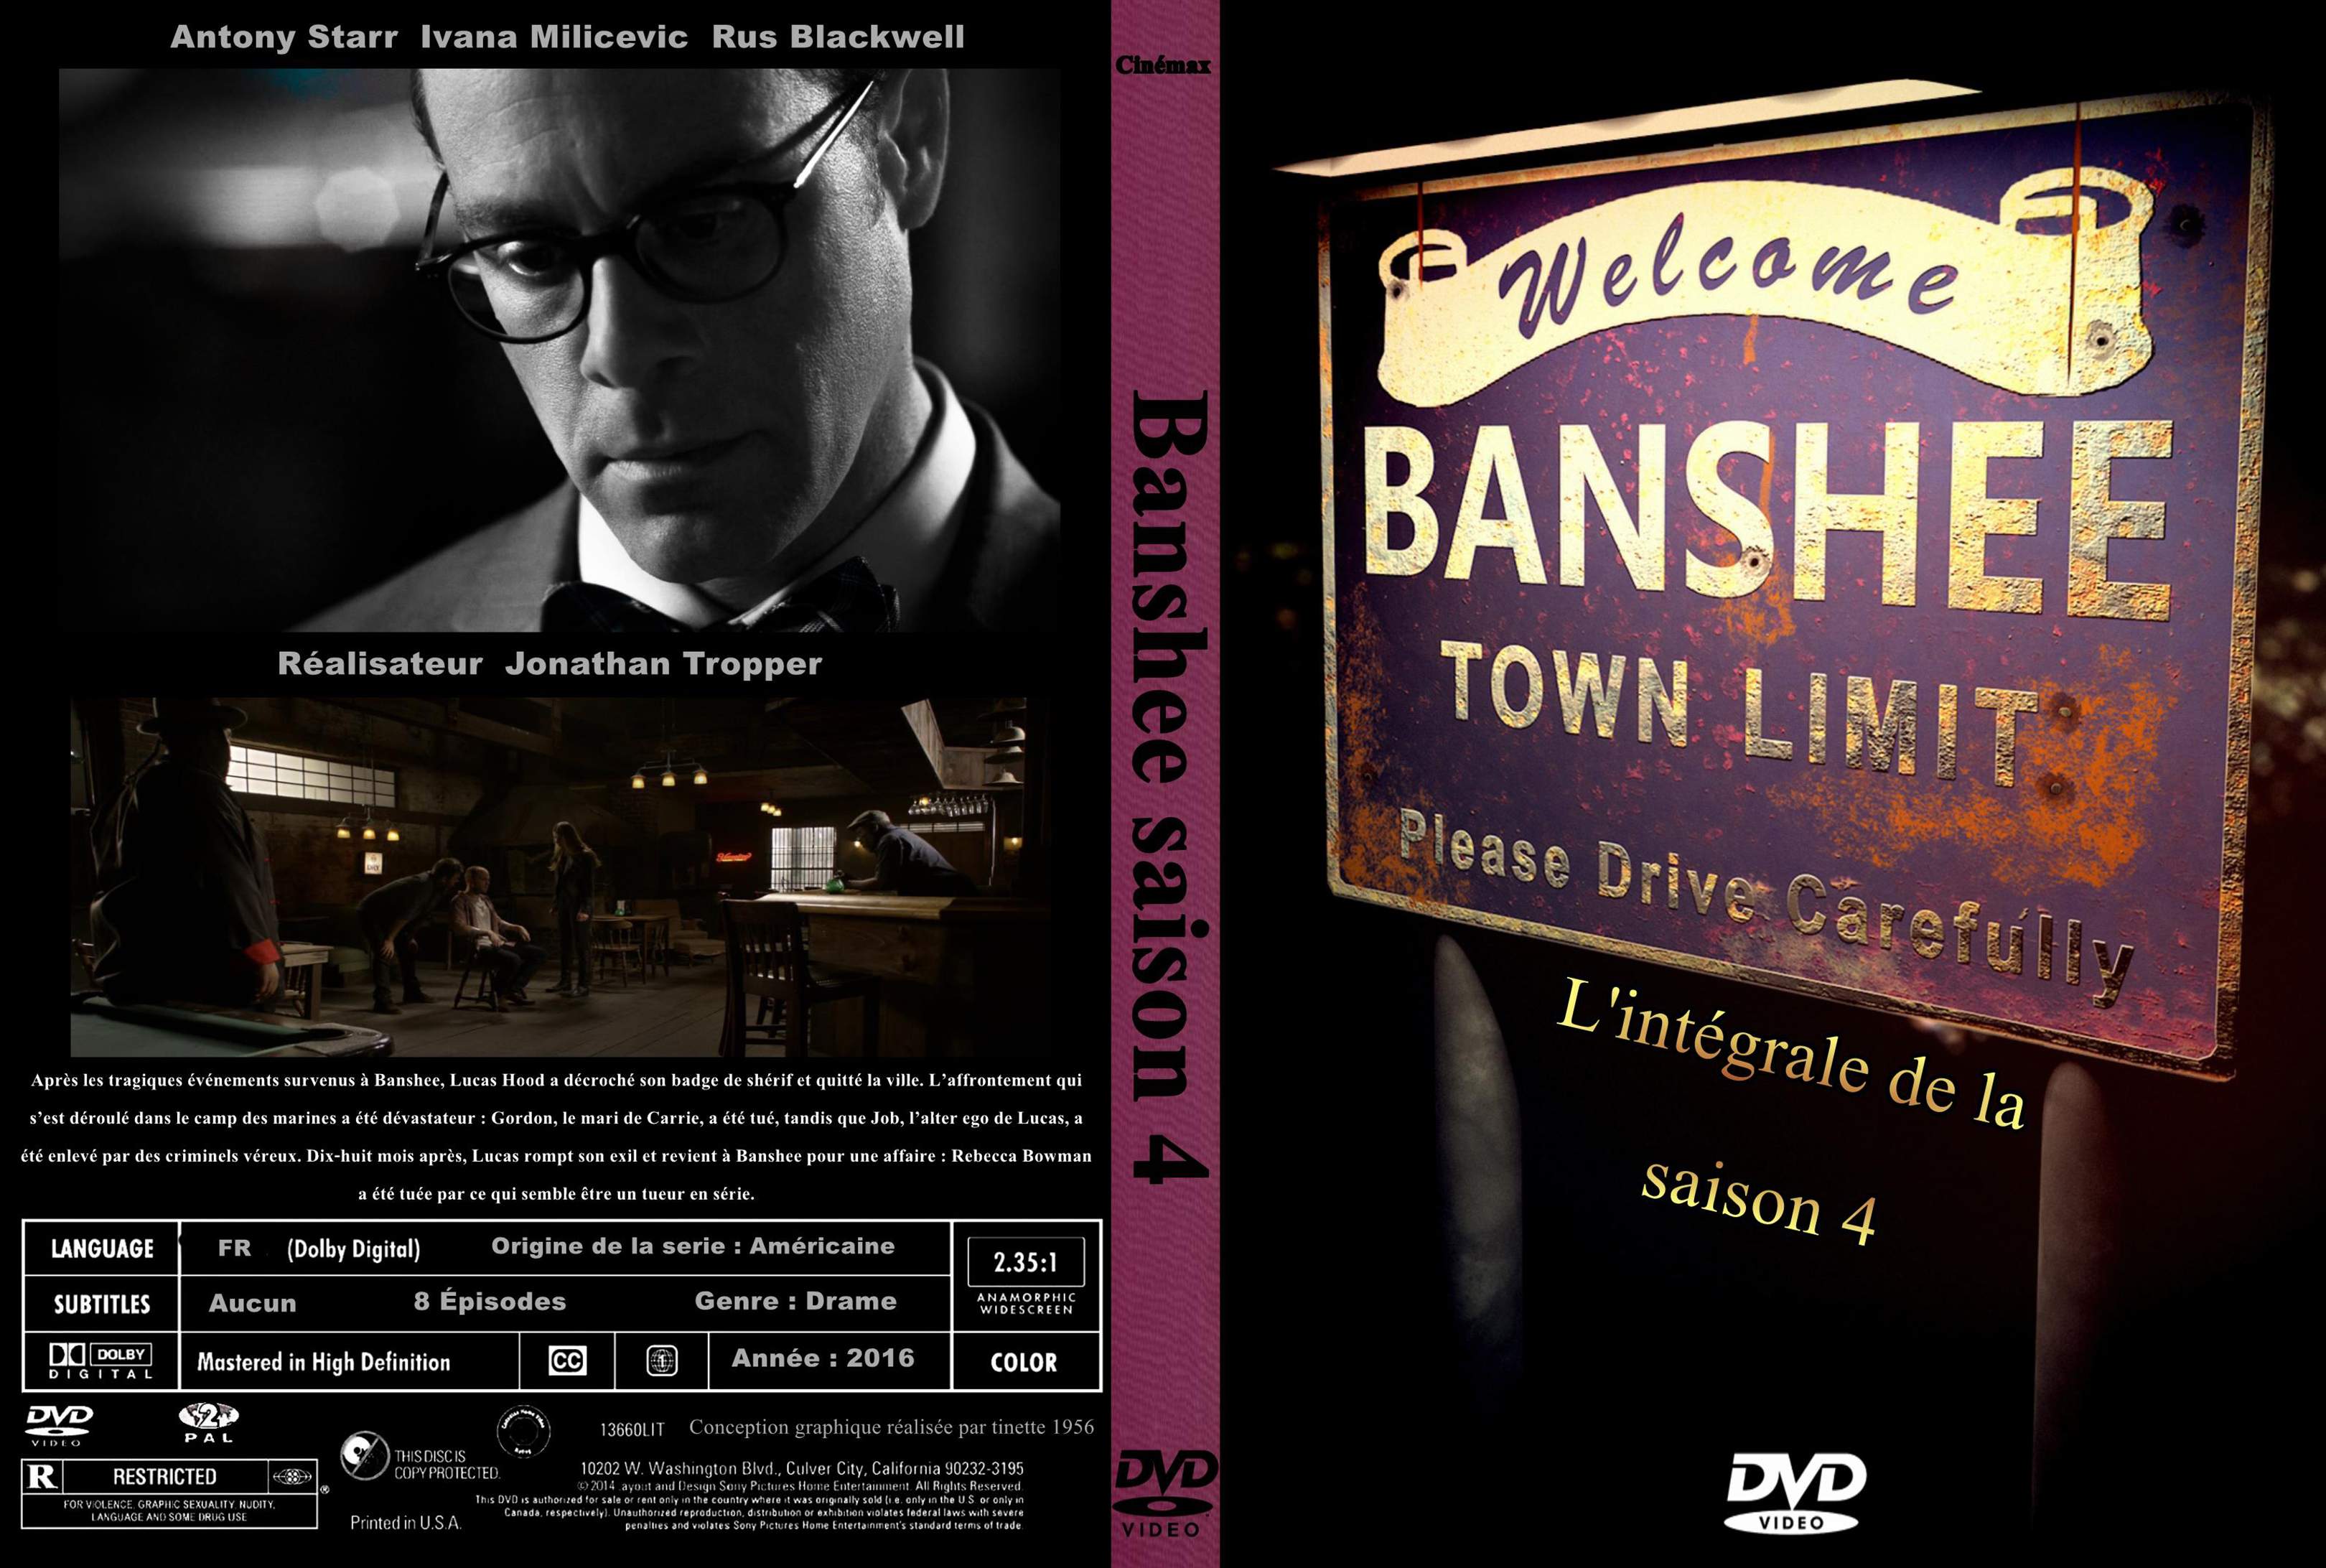 Jaquette DVD Banshee saison 4 custom